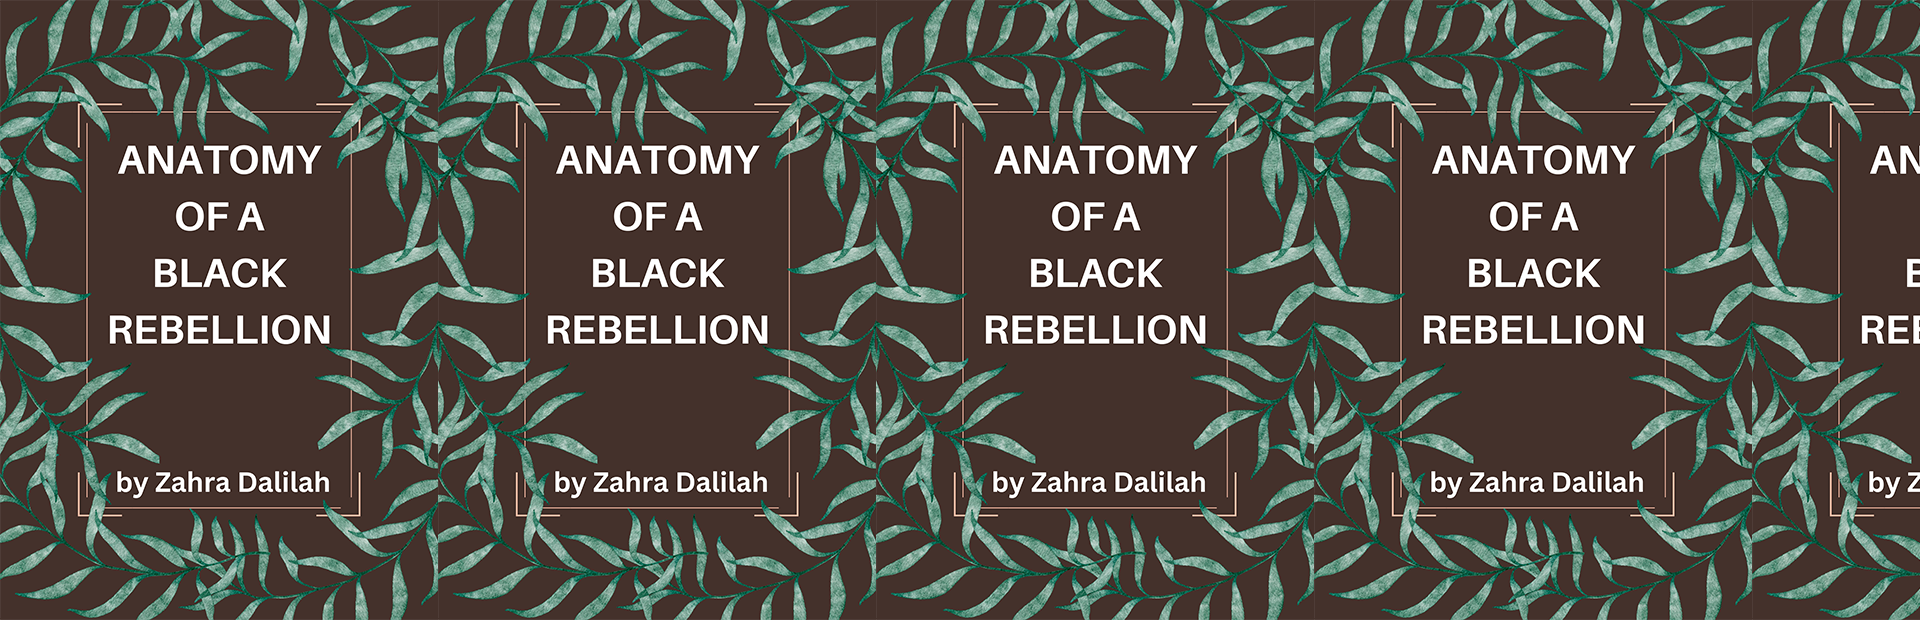 Anatomy of a Black Rebellion